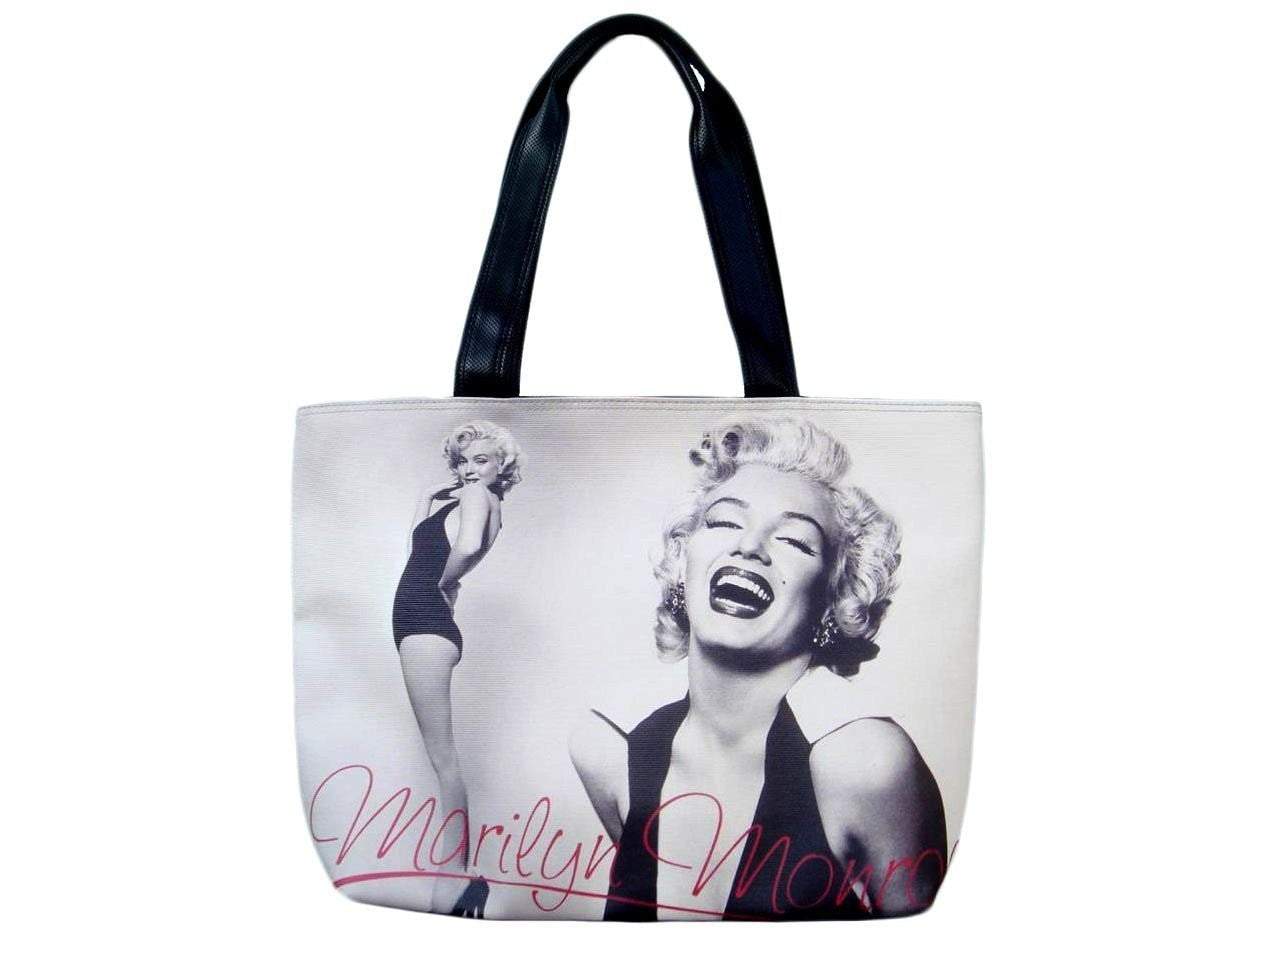 Marilyn Monroe Ballerina Tote Bag with Signature - SilverMania925